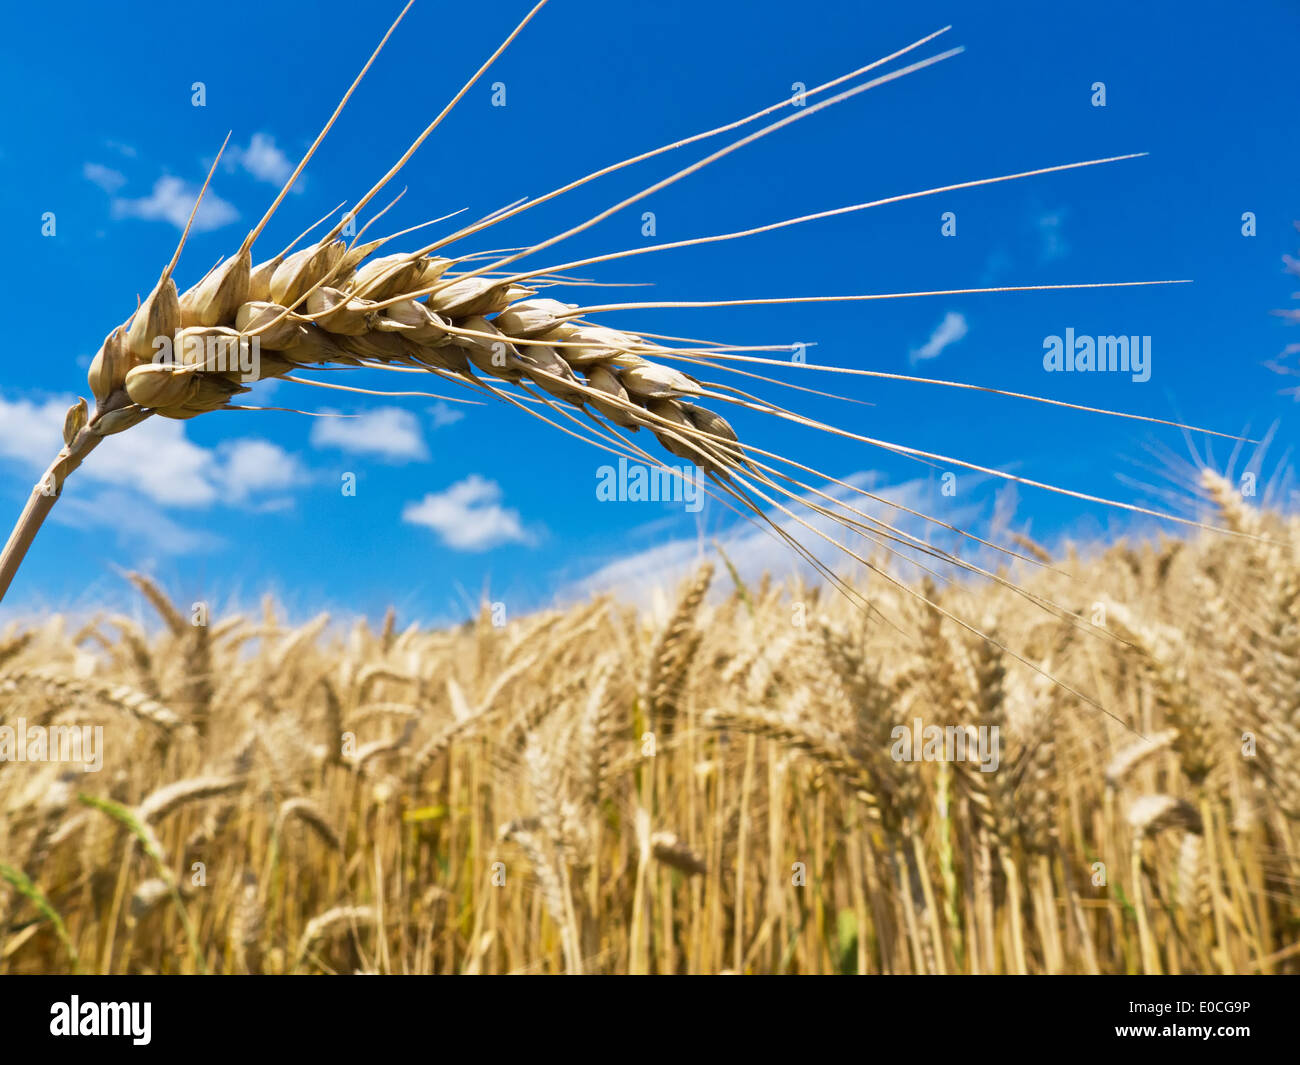 Les oreilles d'orge sur un grain-champ d'un agriculteur de l'été., von aehren Gerste und auf einem Getreidefeld Bauern im Sommer. Banque D'Images